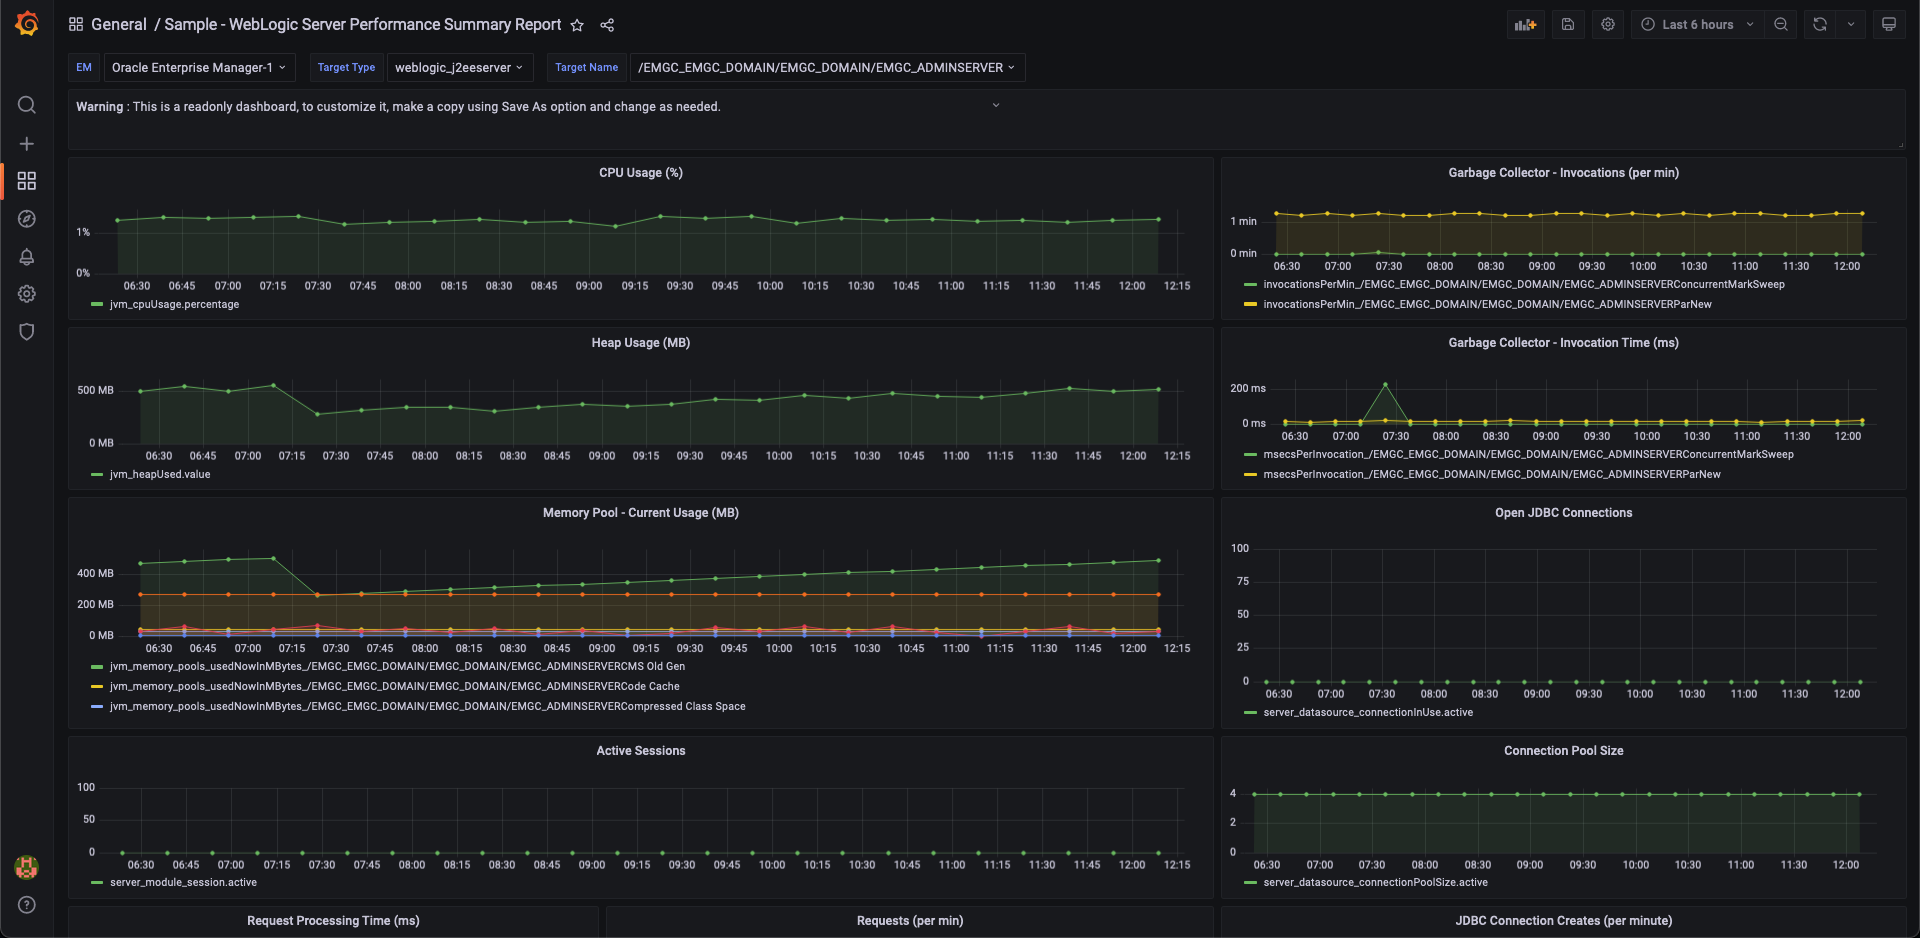 Image shows the WebLogic Server Performance Summary dashboard.